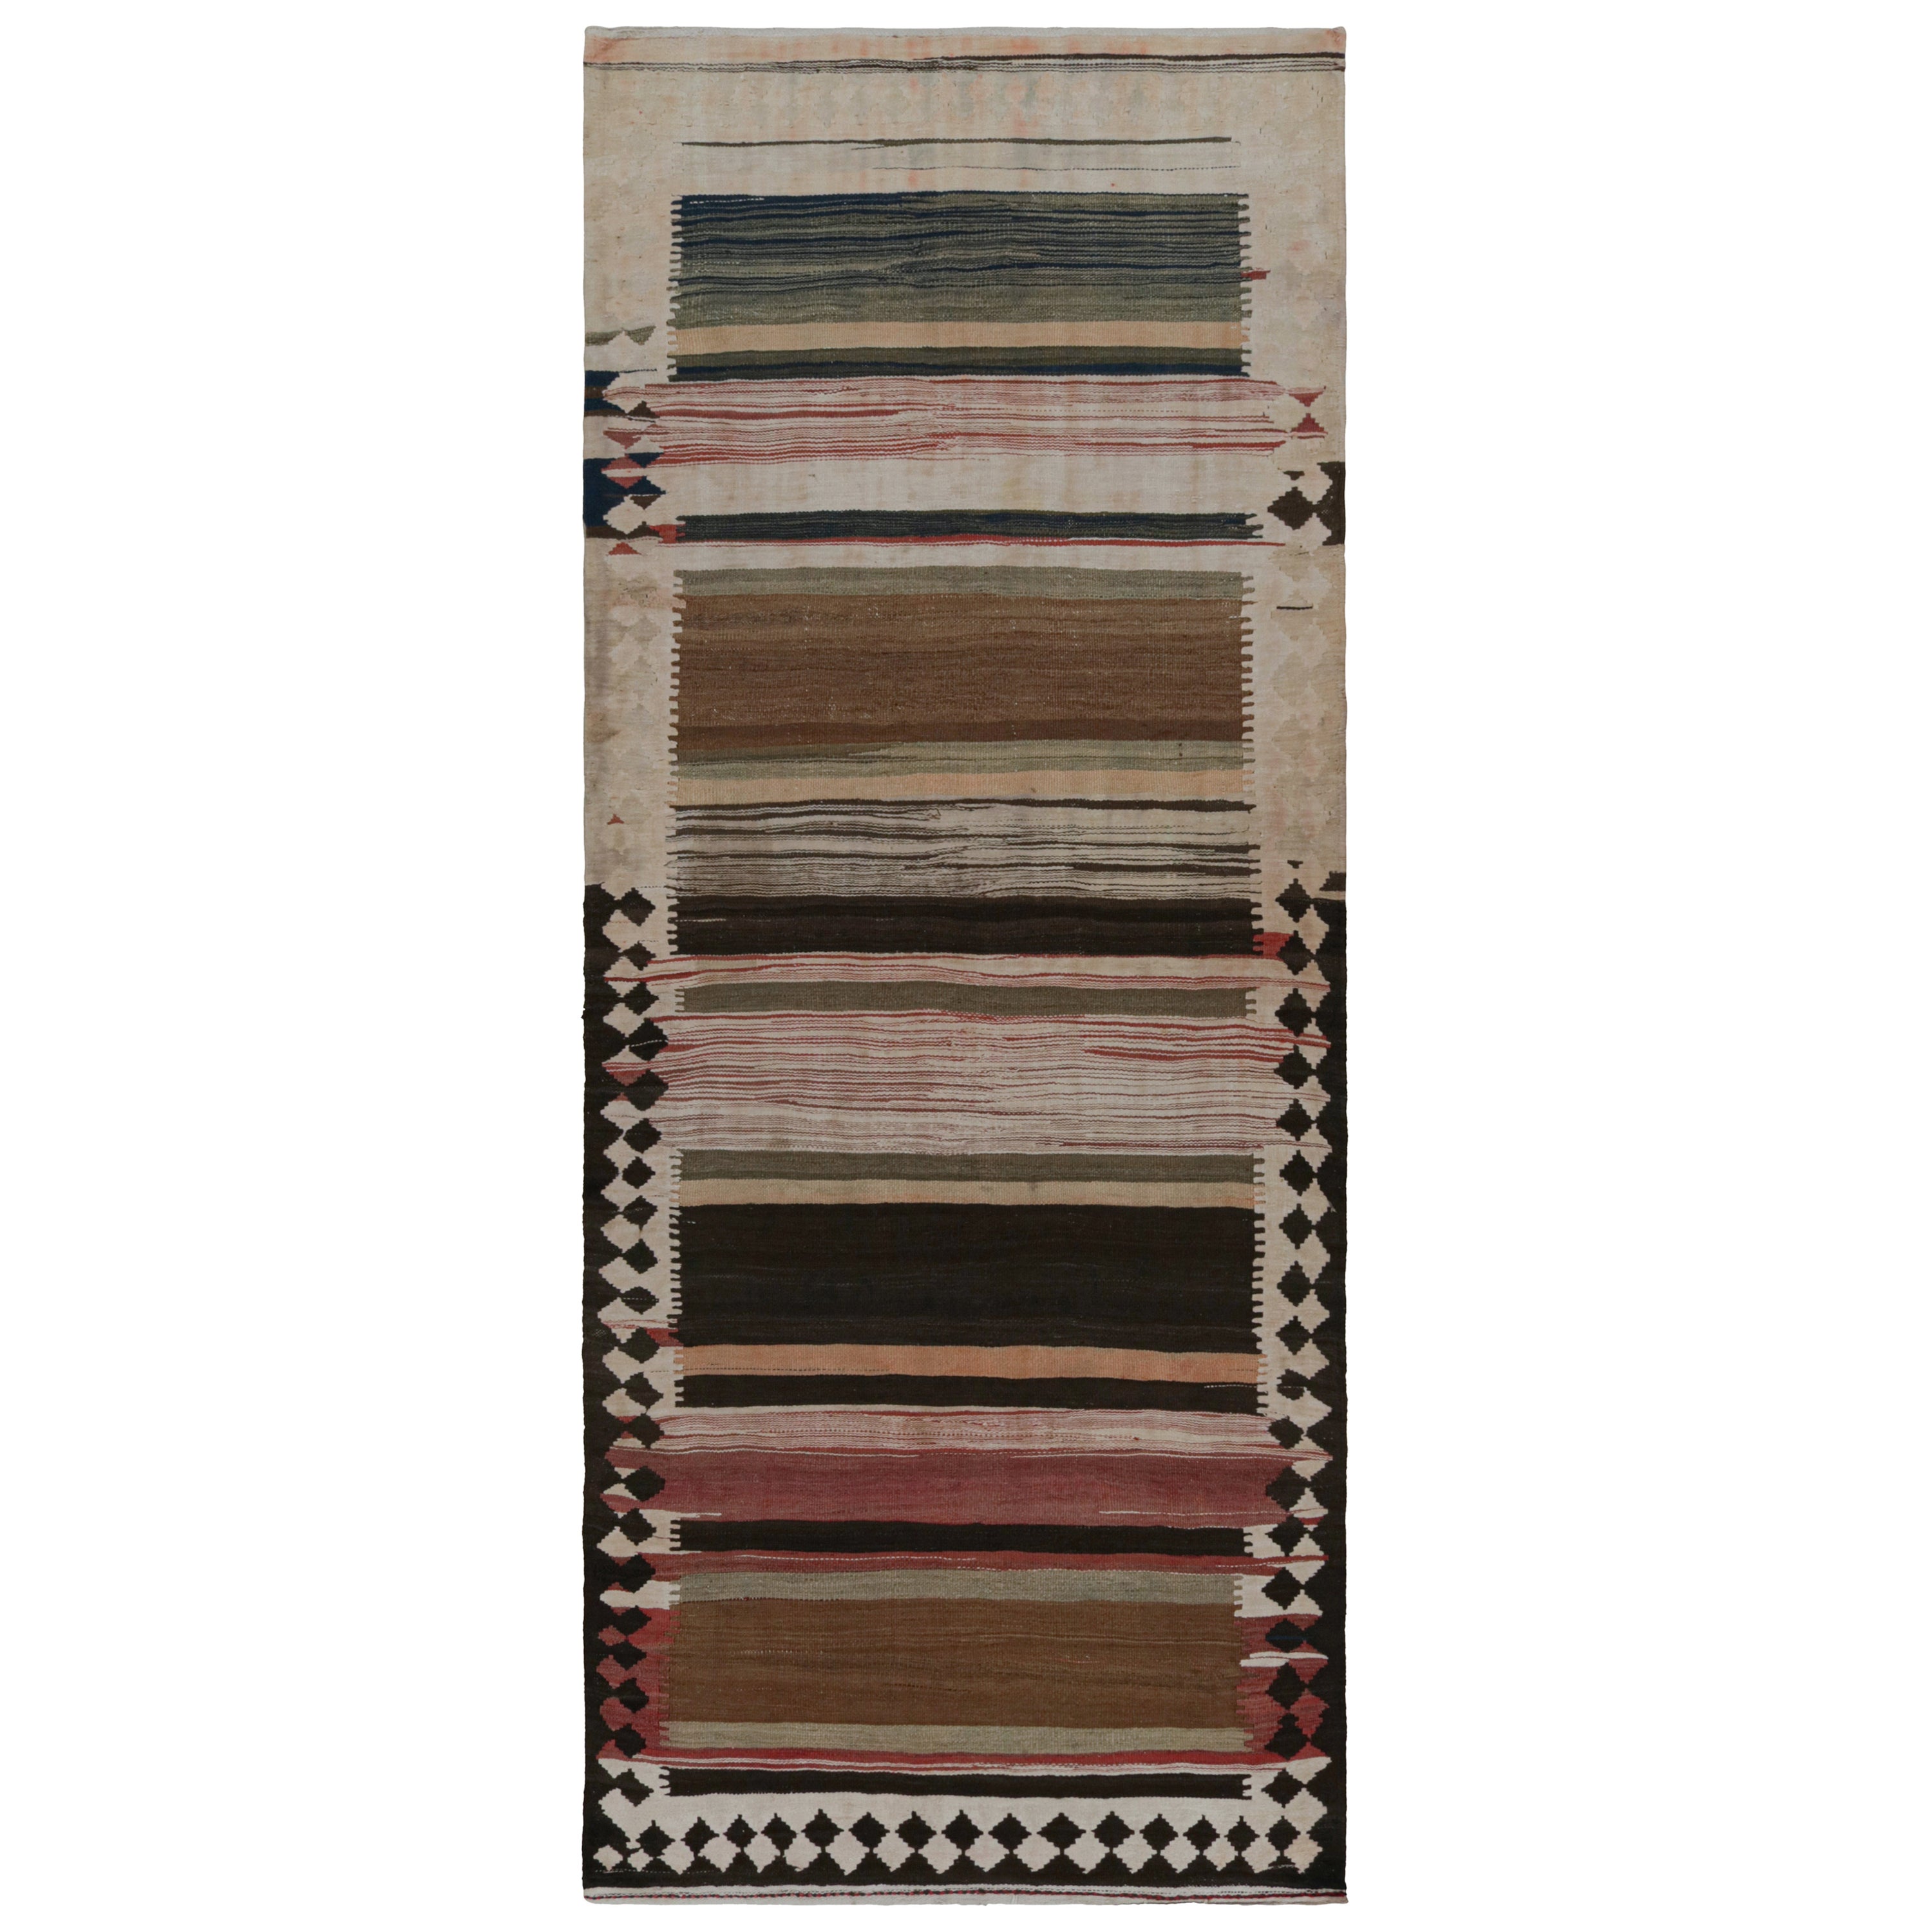 Vintage Persian tribal Kilim rug, with Stripes, from Rug & Kilim